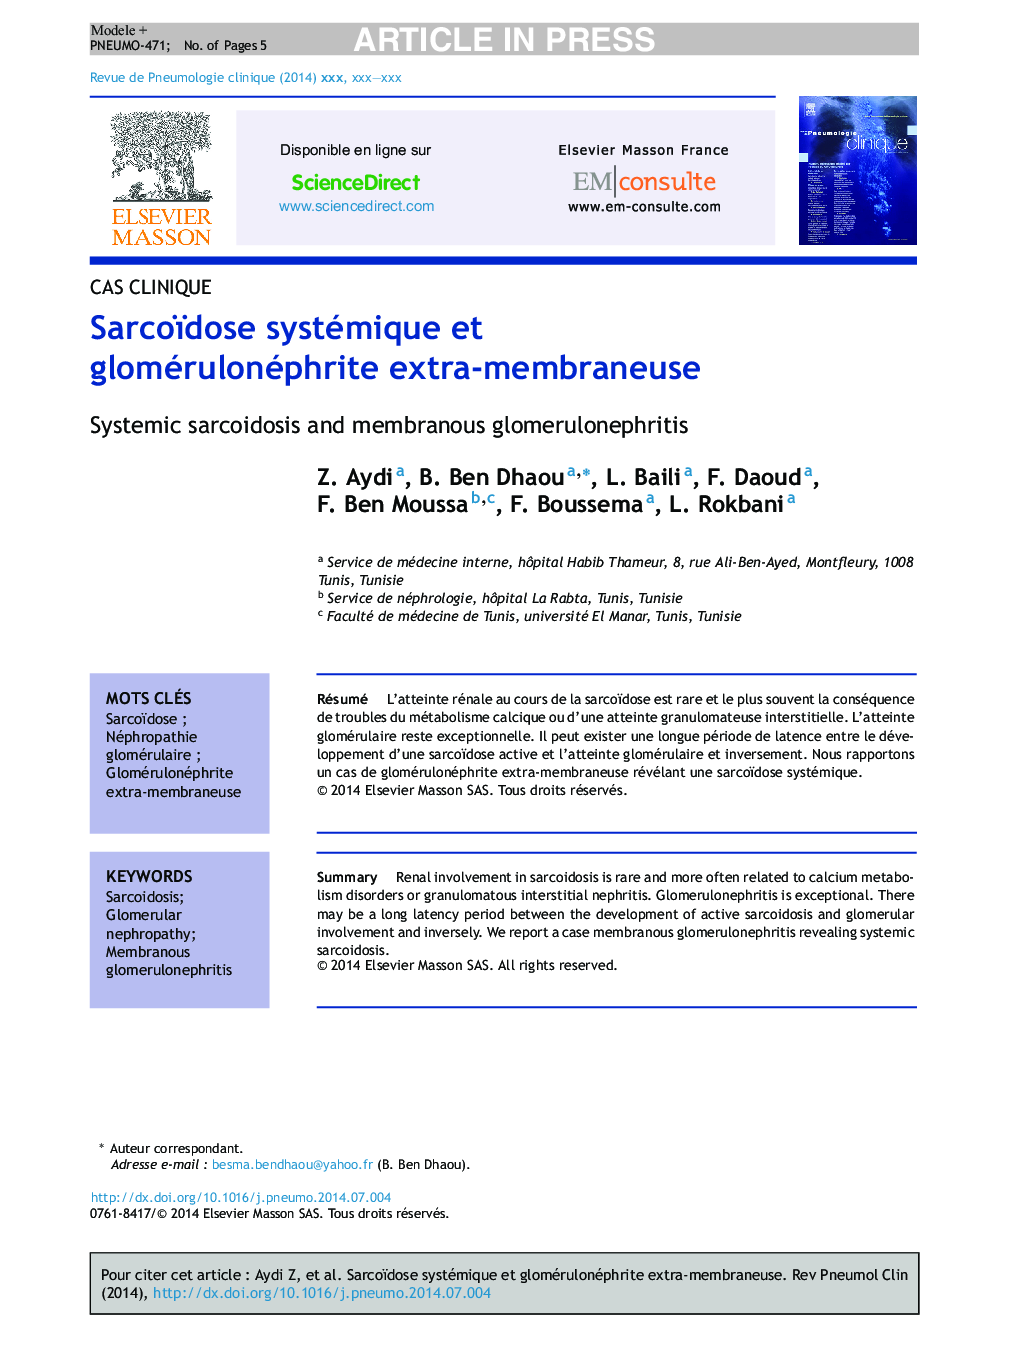 Sarcoïdose systémique et glomérulonéphrite extra-membraneuse